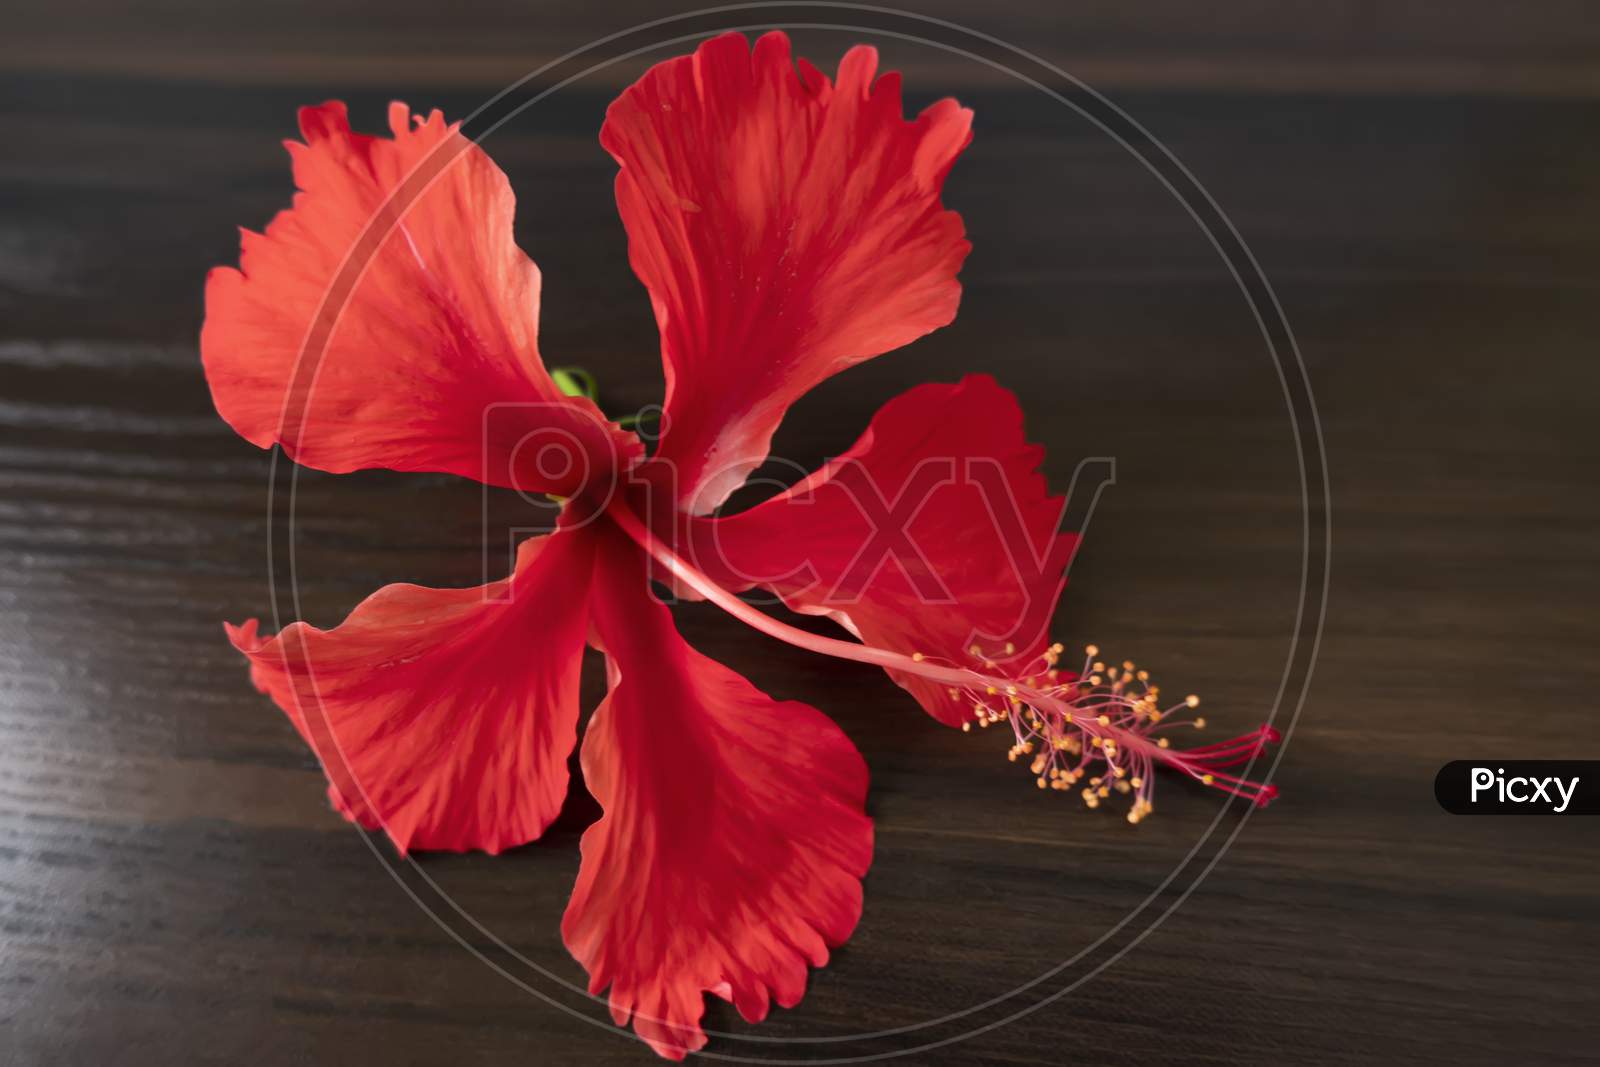 Red Daasaval (Hibiscus) Flower On Wood Background